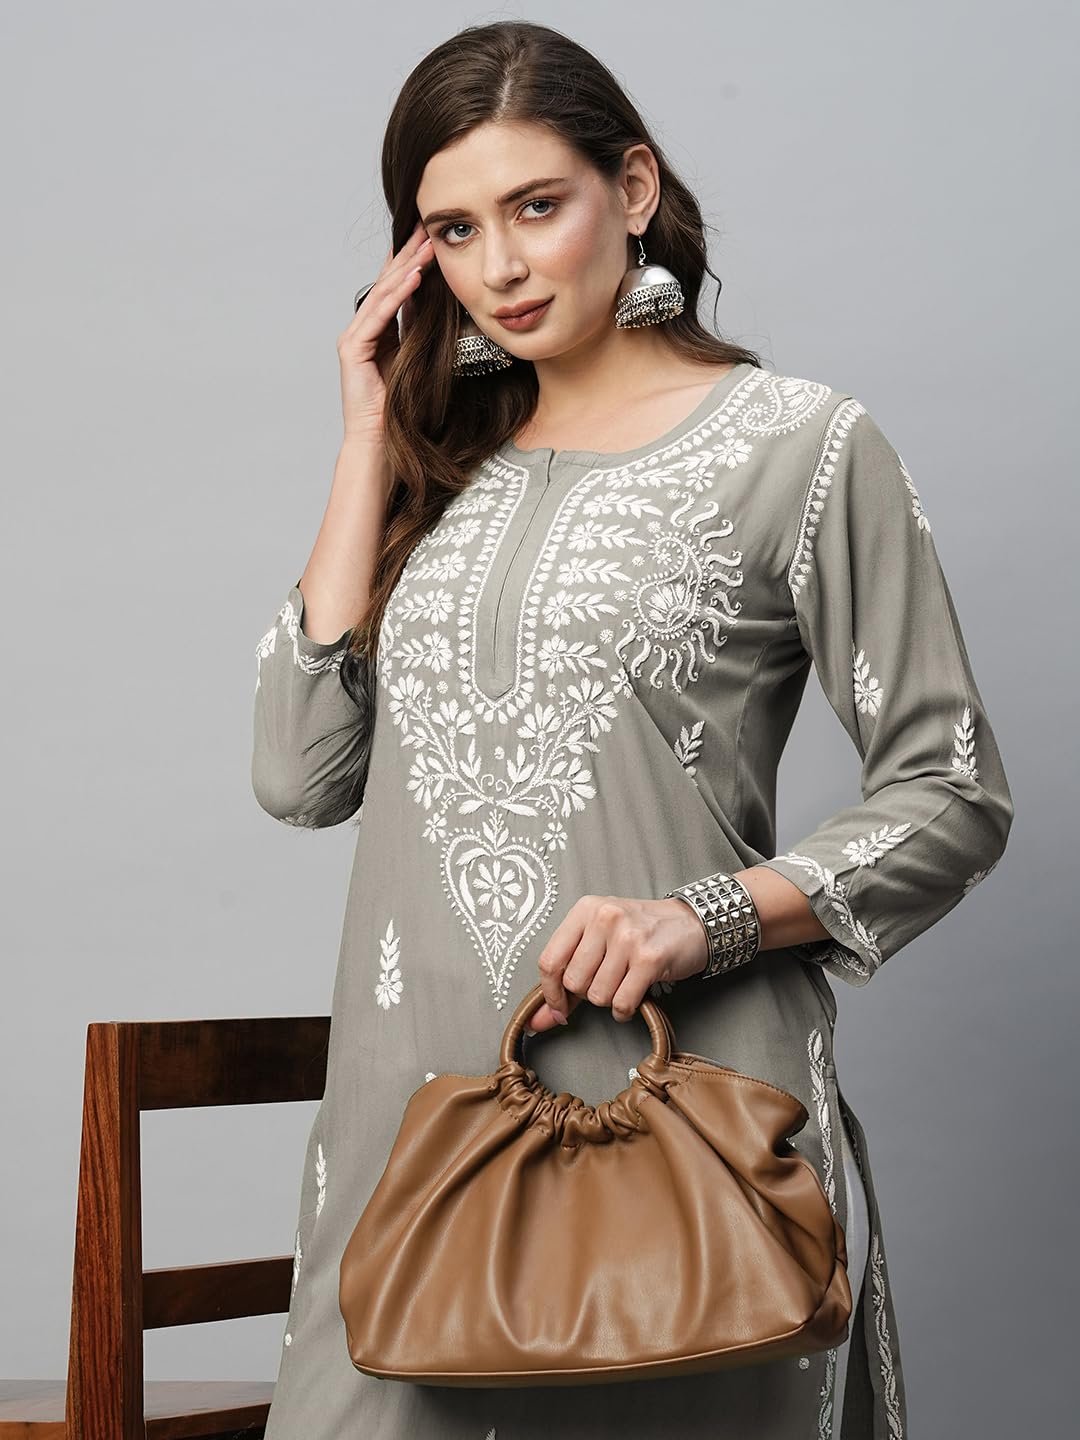 Ada Hand Embroidered Ethnic Wear Straight Rayon Lucknow Chikankari Kurta Kurti Tunic for Women A411492 Grey (M)